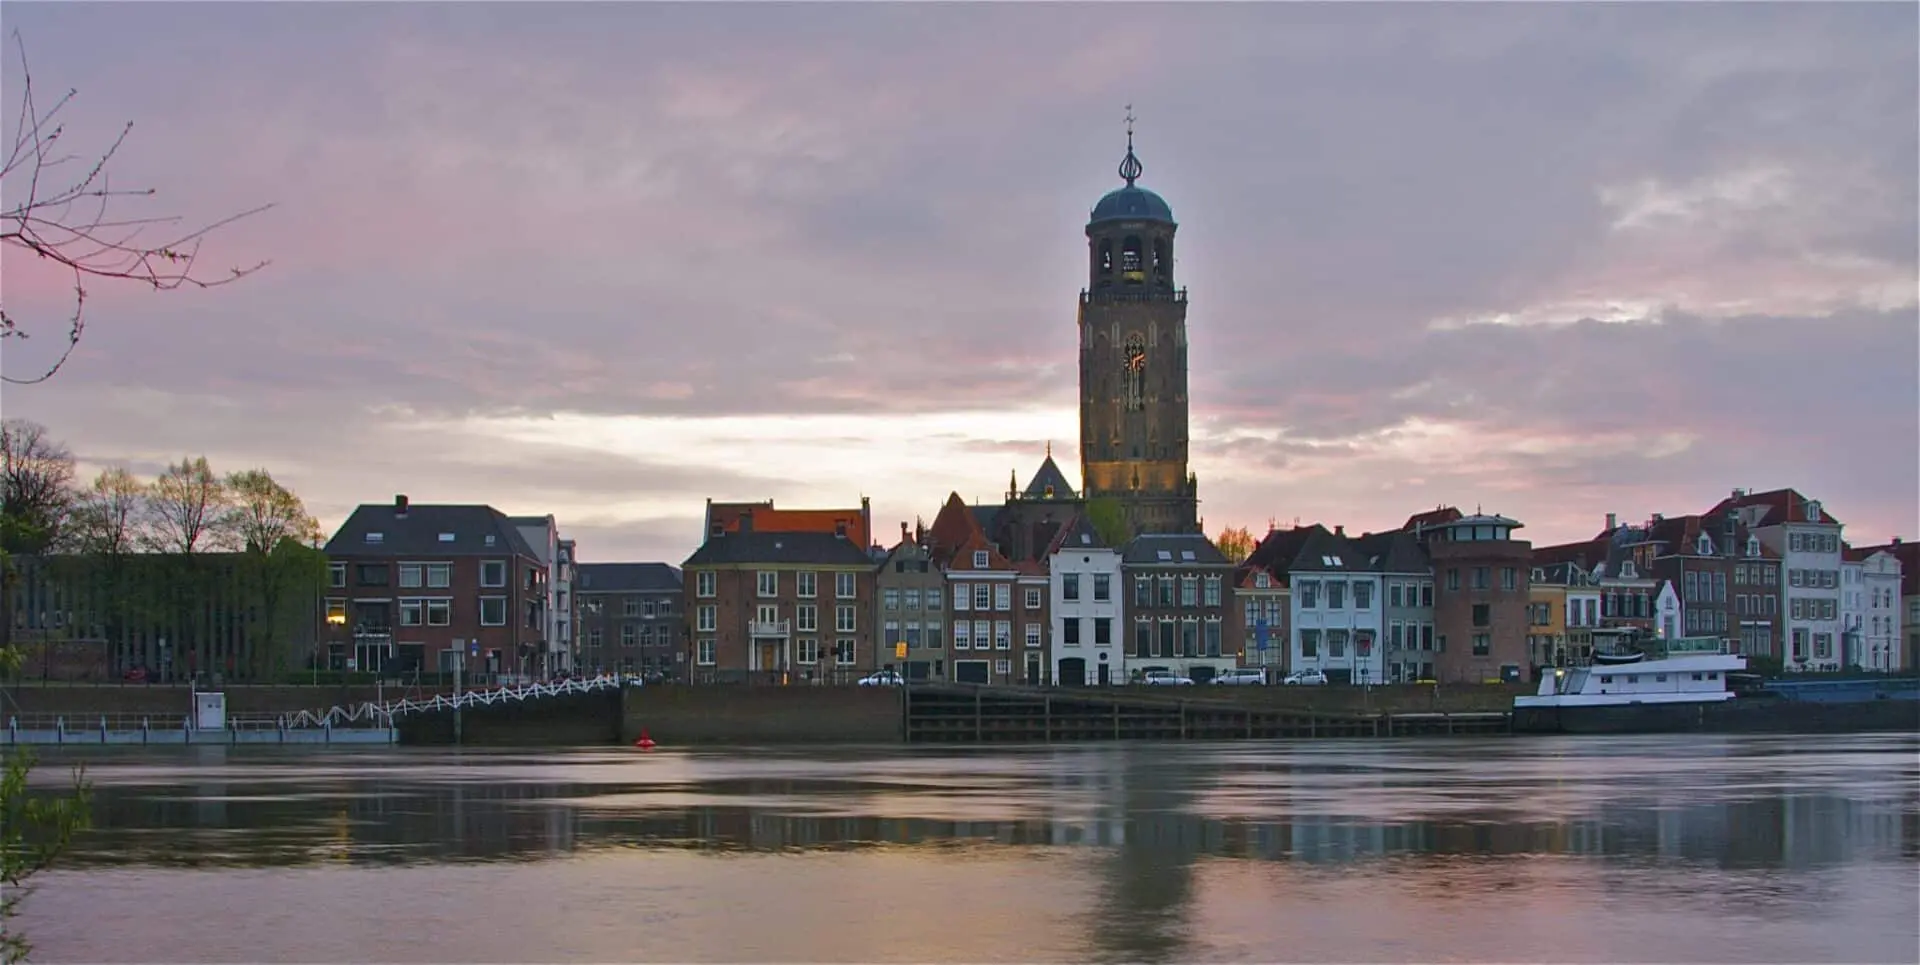 Photographs of Deventer